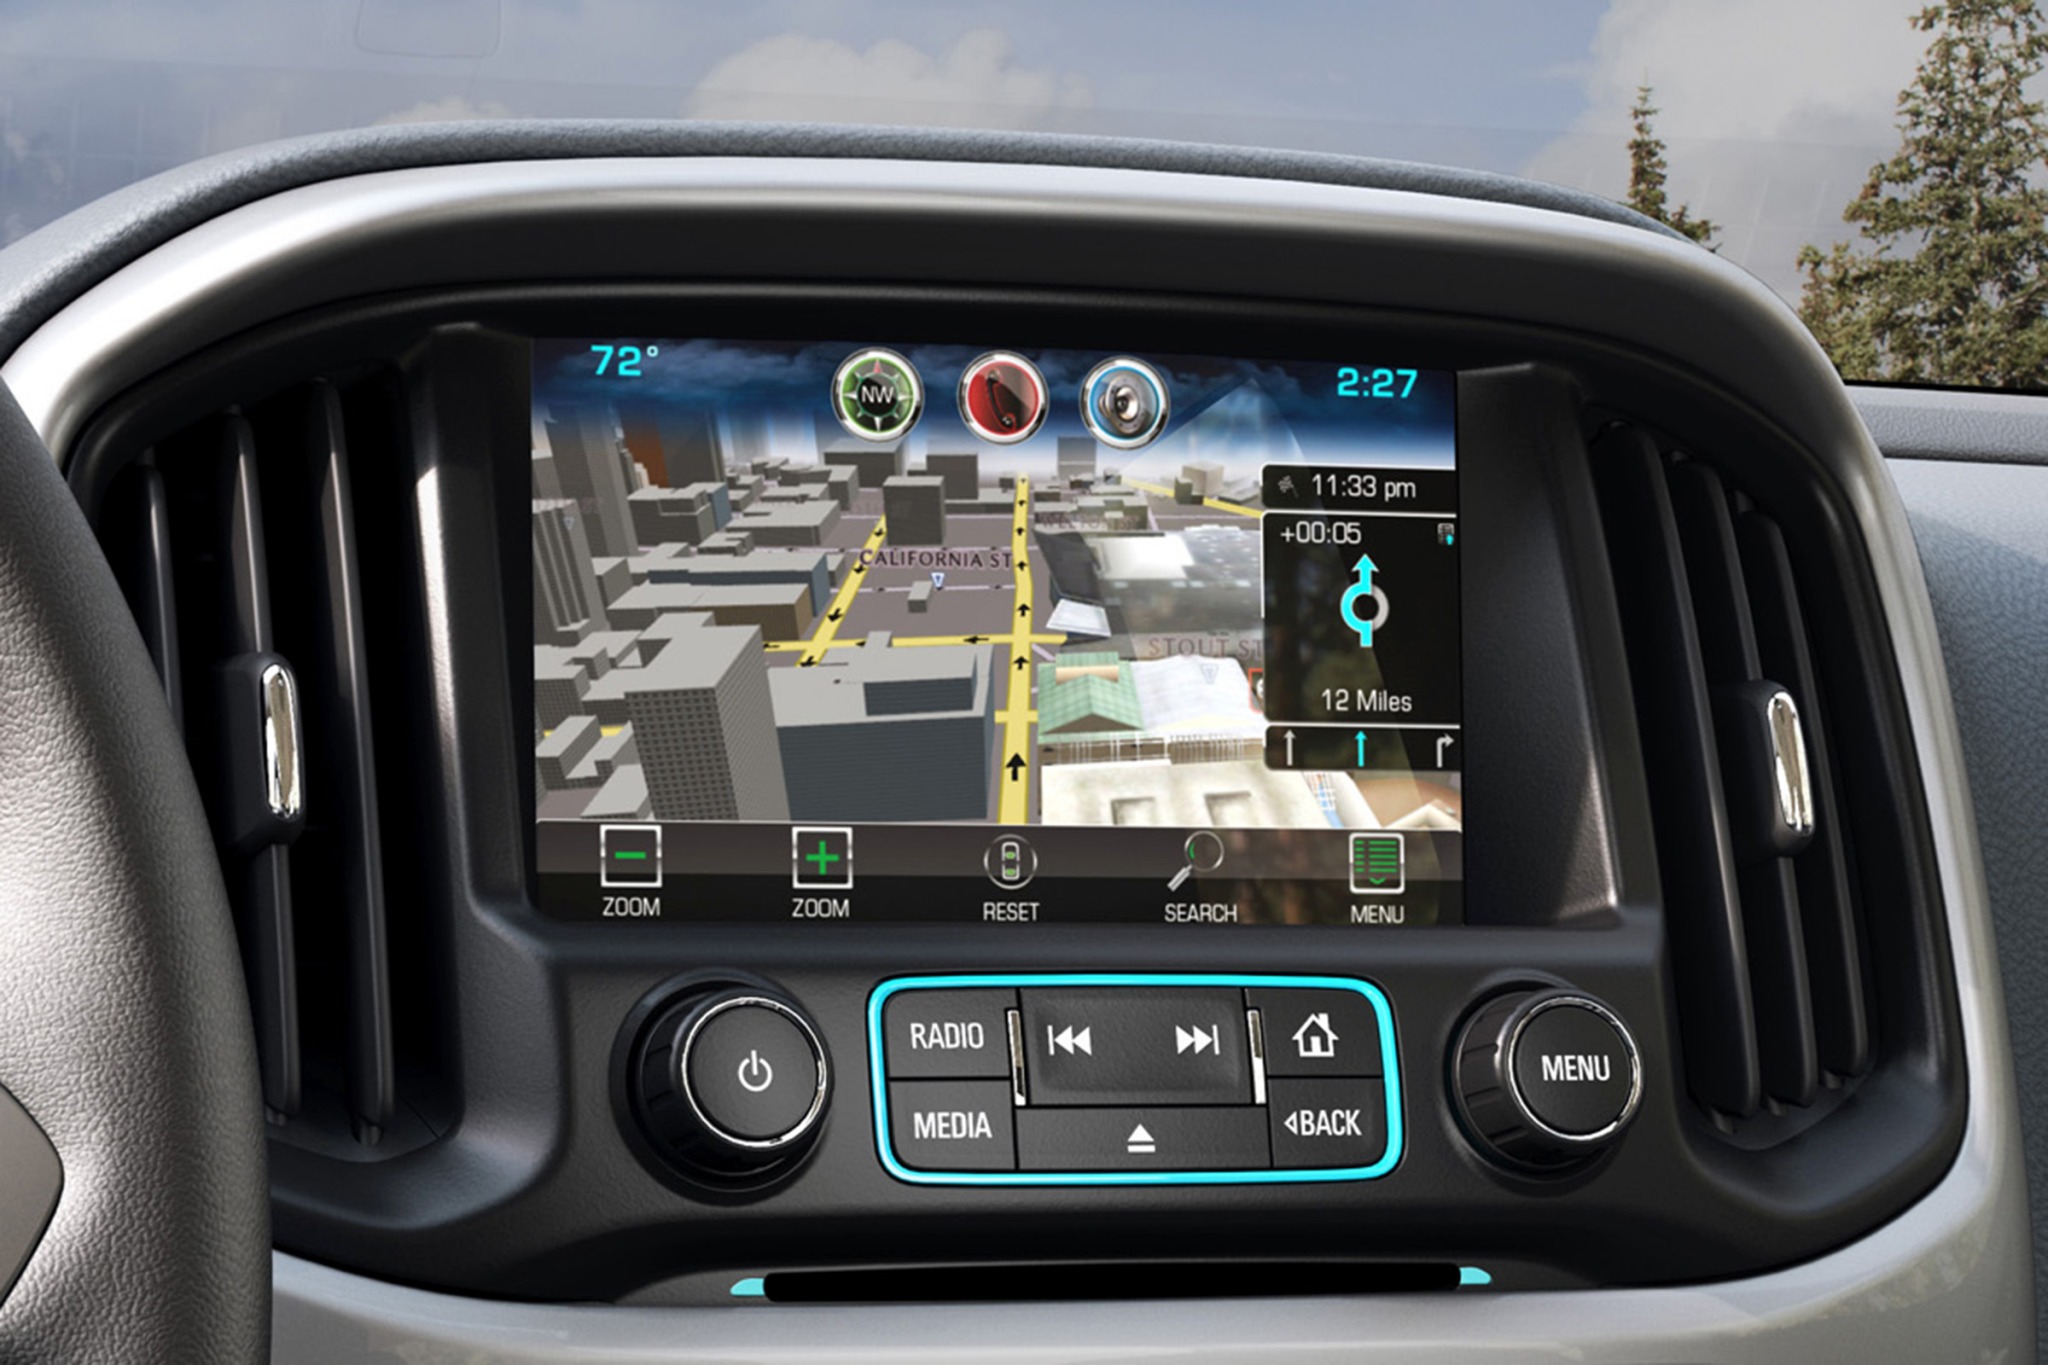 2016 Chevrolet Colorado Z71 Extended Cab Pickup Navigation System